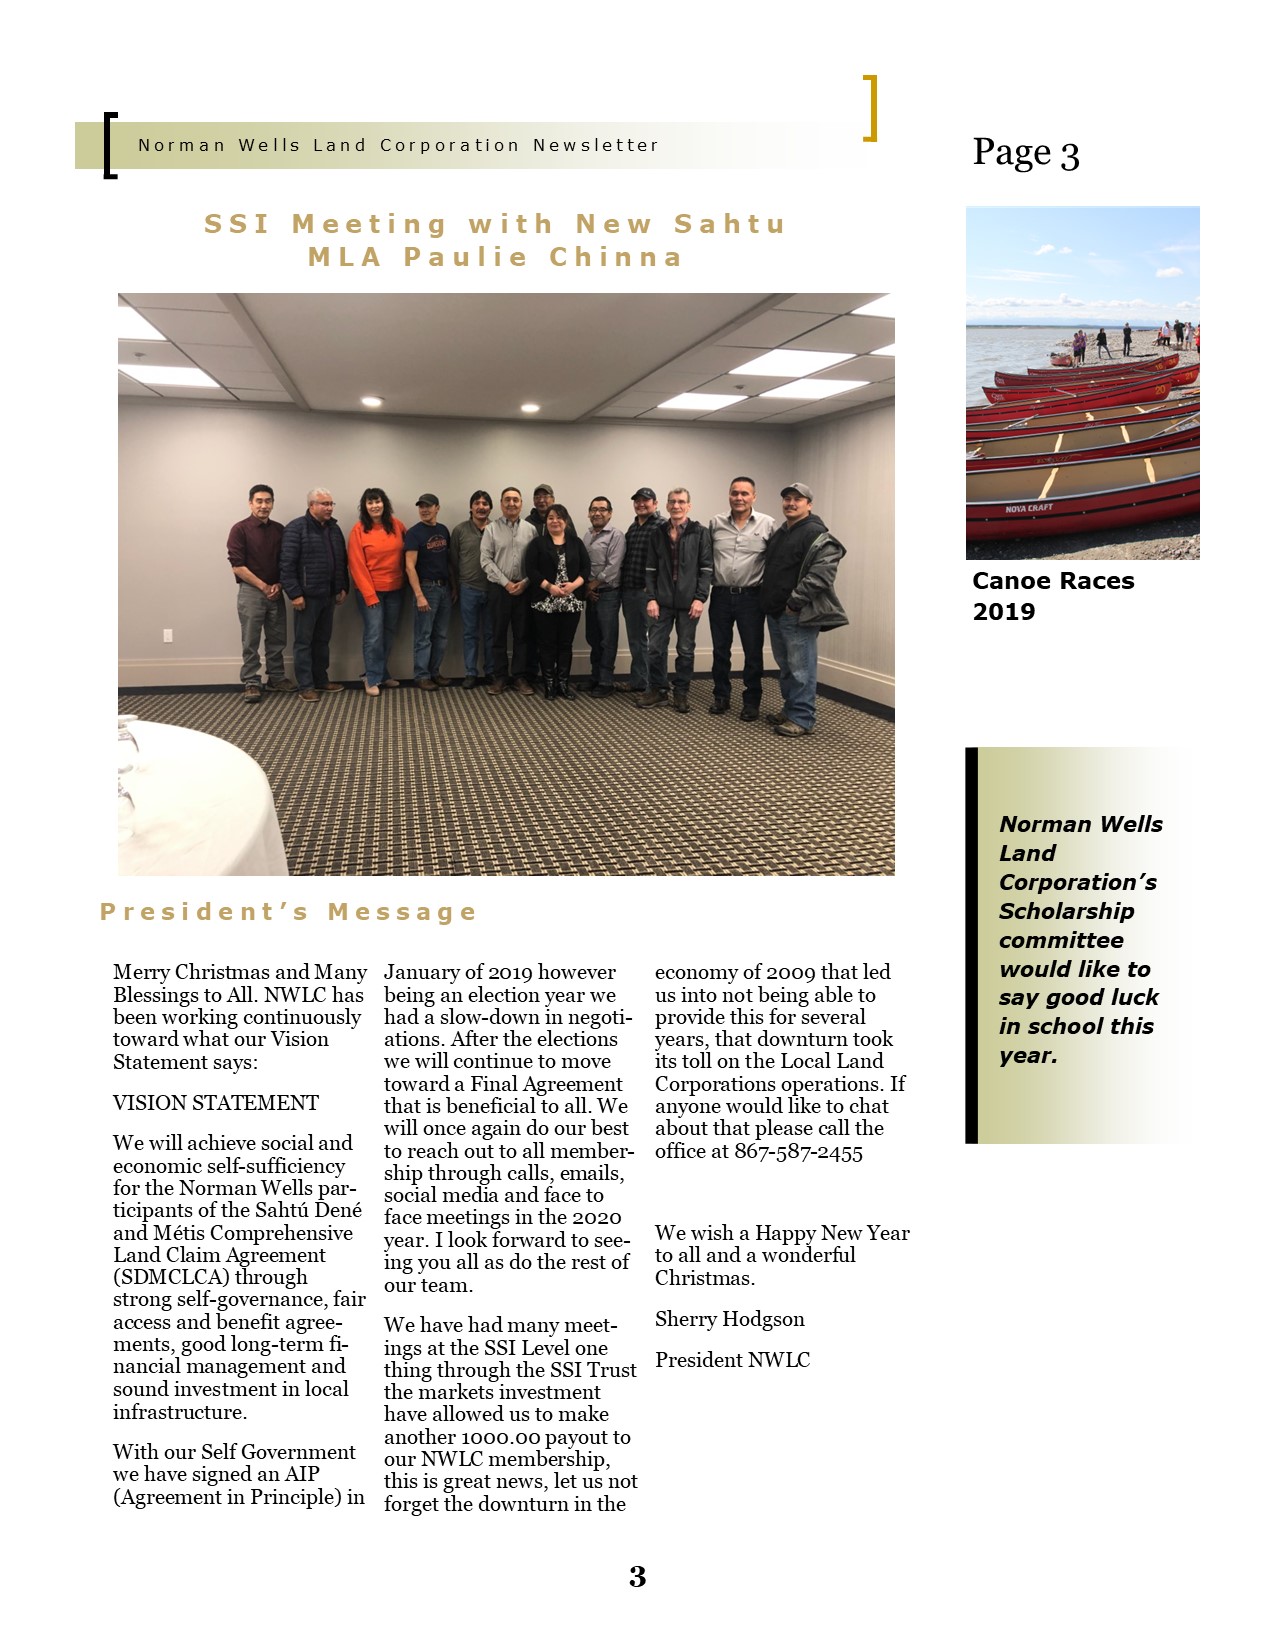 NWLC Newsletter December 2019 Page 3